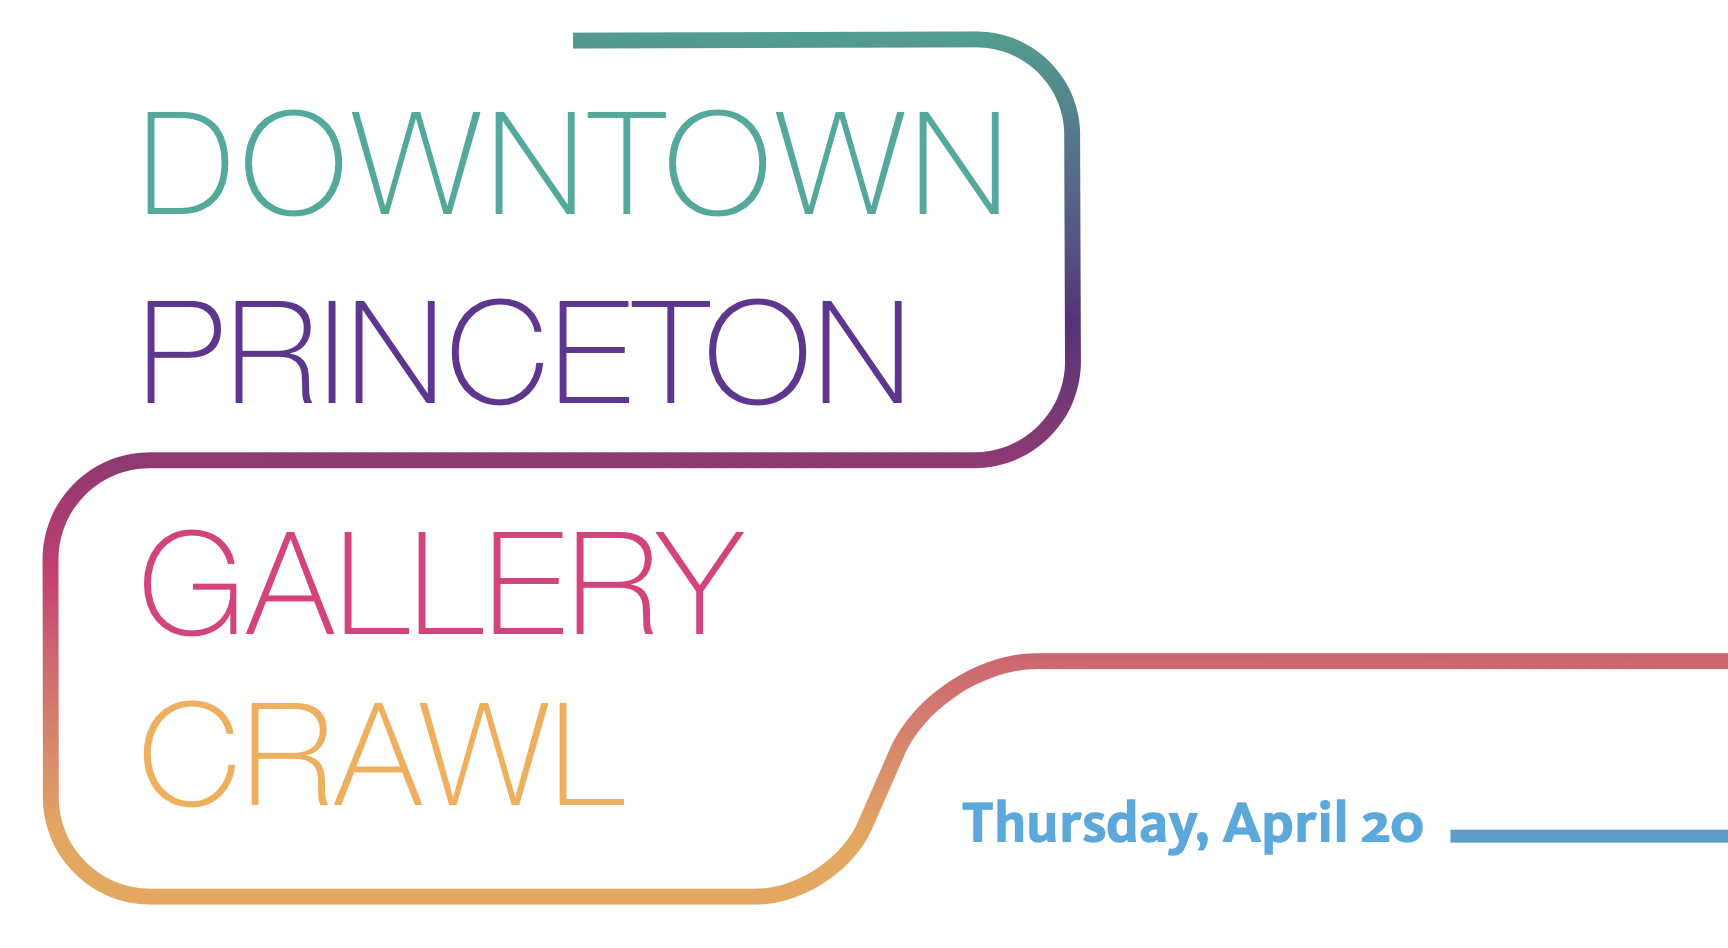 Downtown Princeton Gallery Crawl